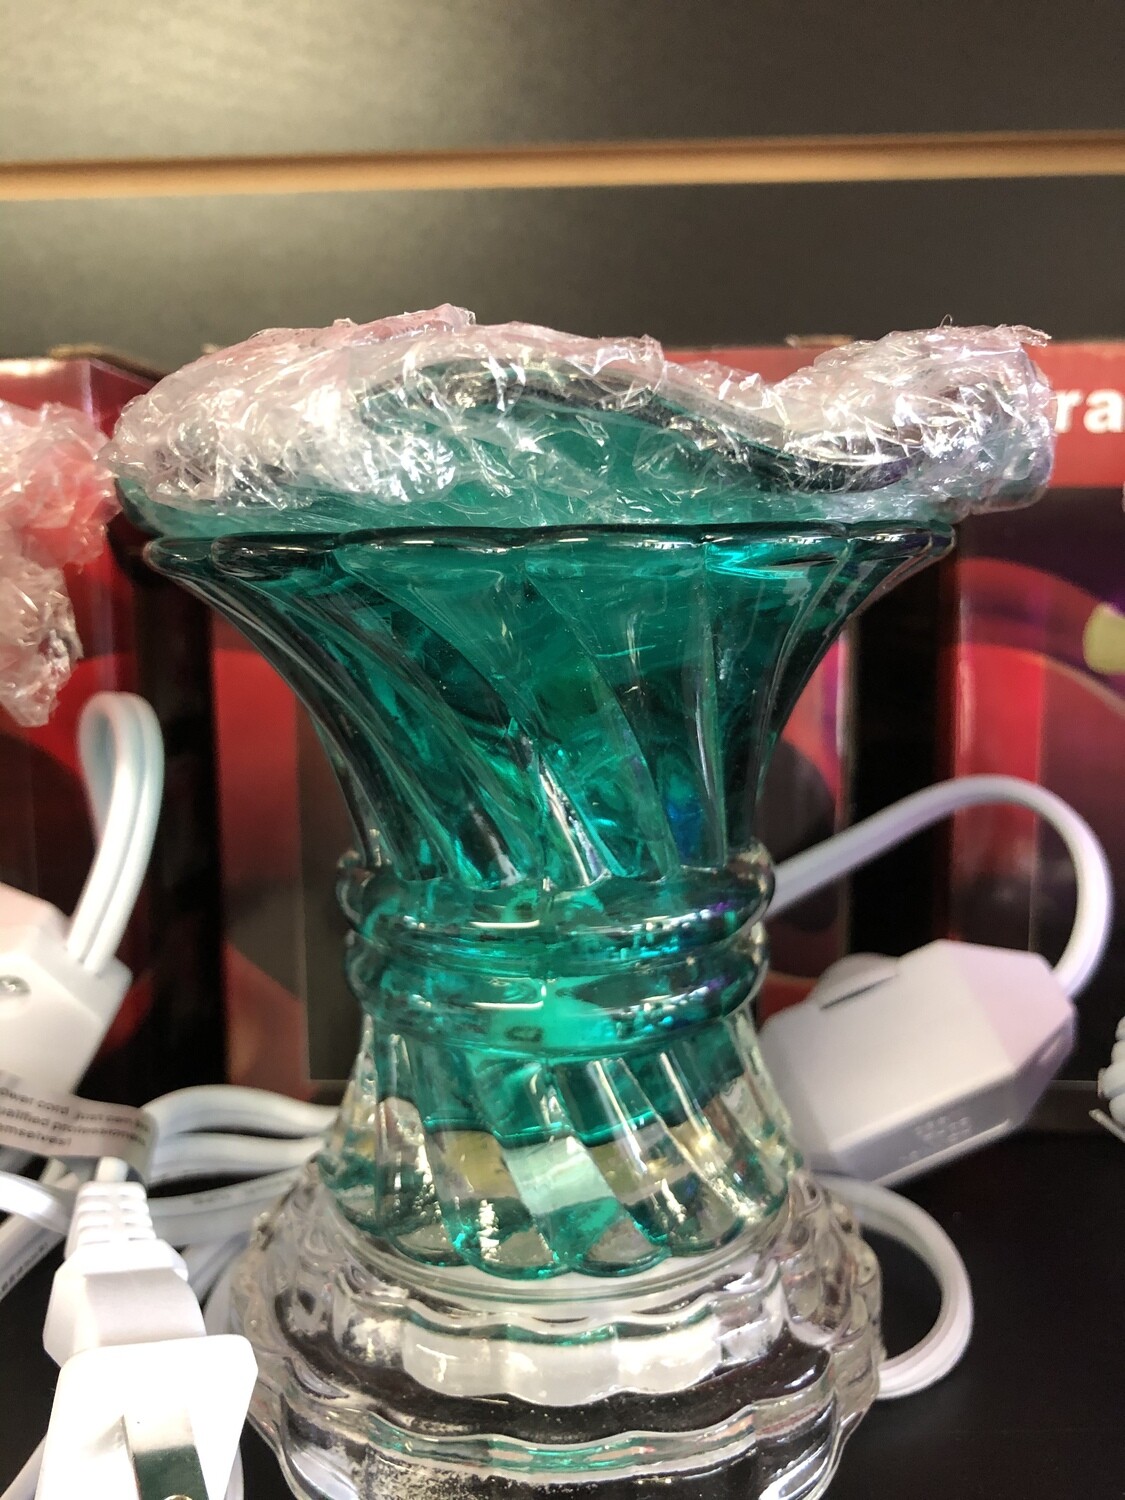 Teal fragrance lamp